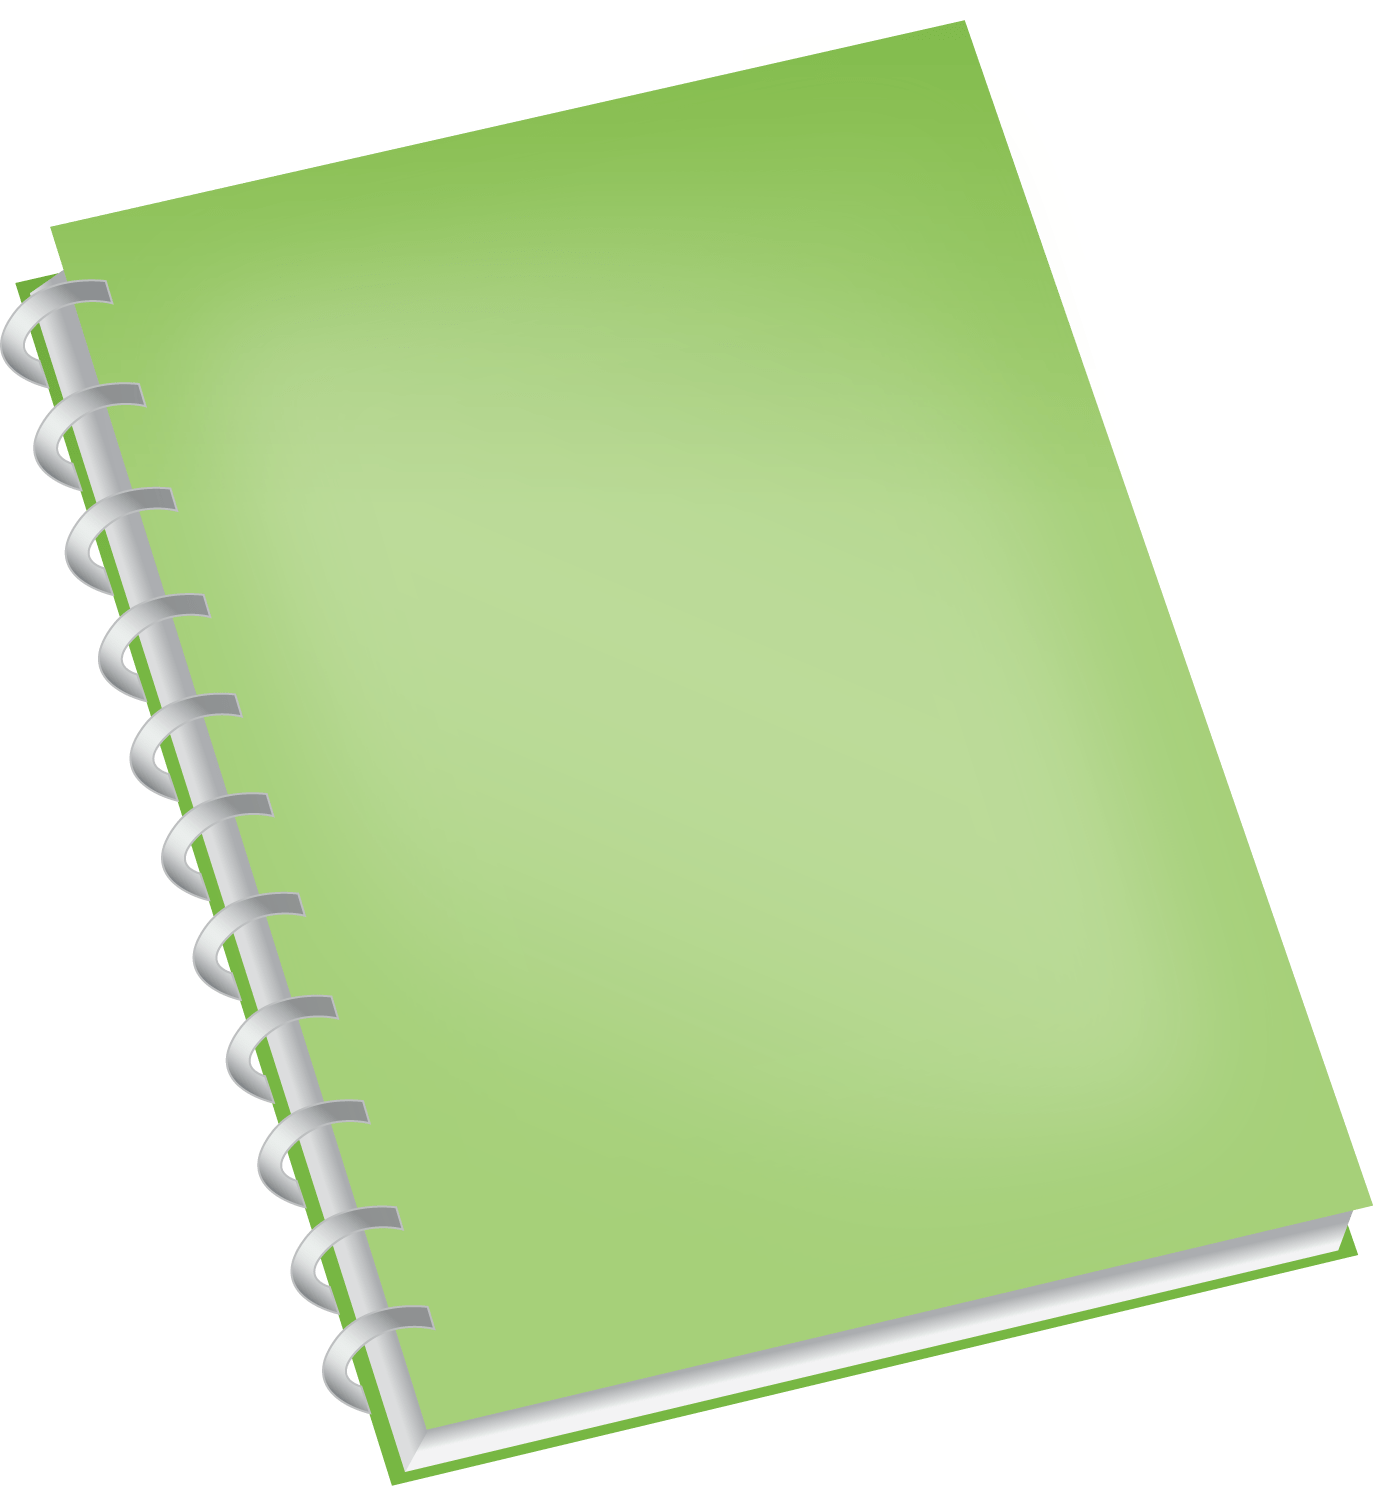 Green Notebook transparent PNG.